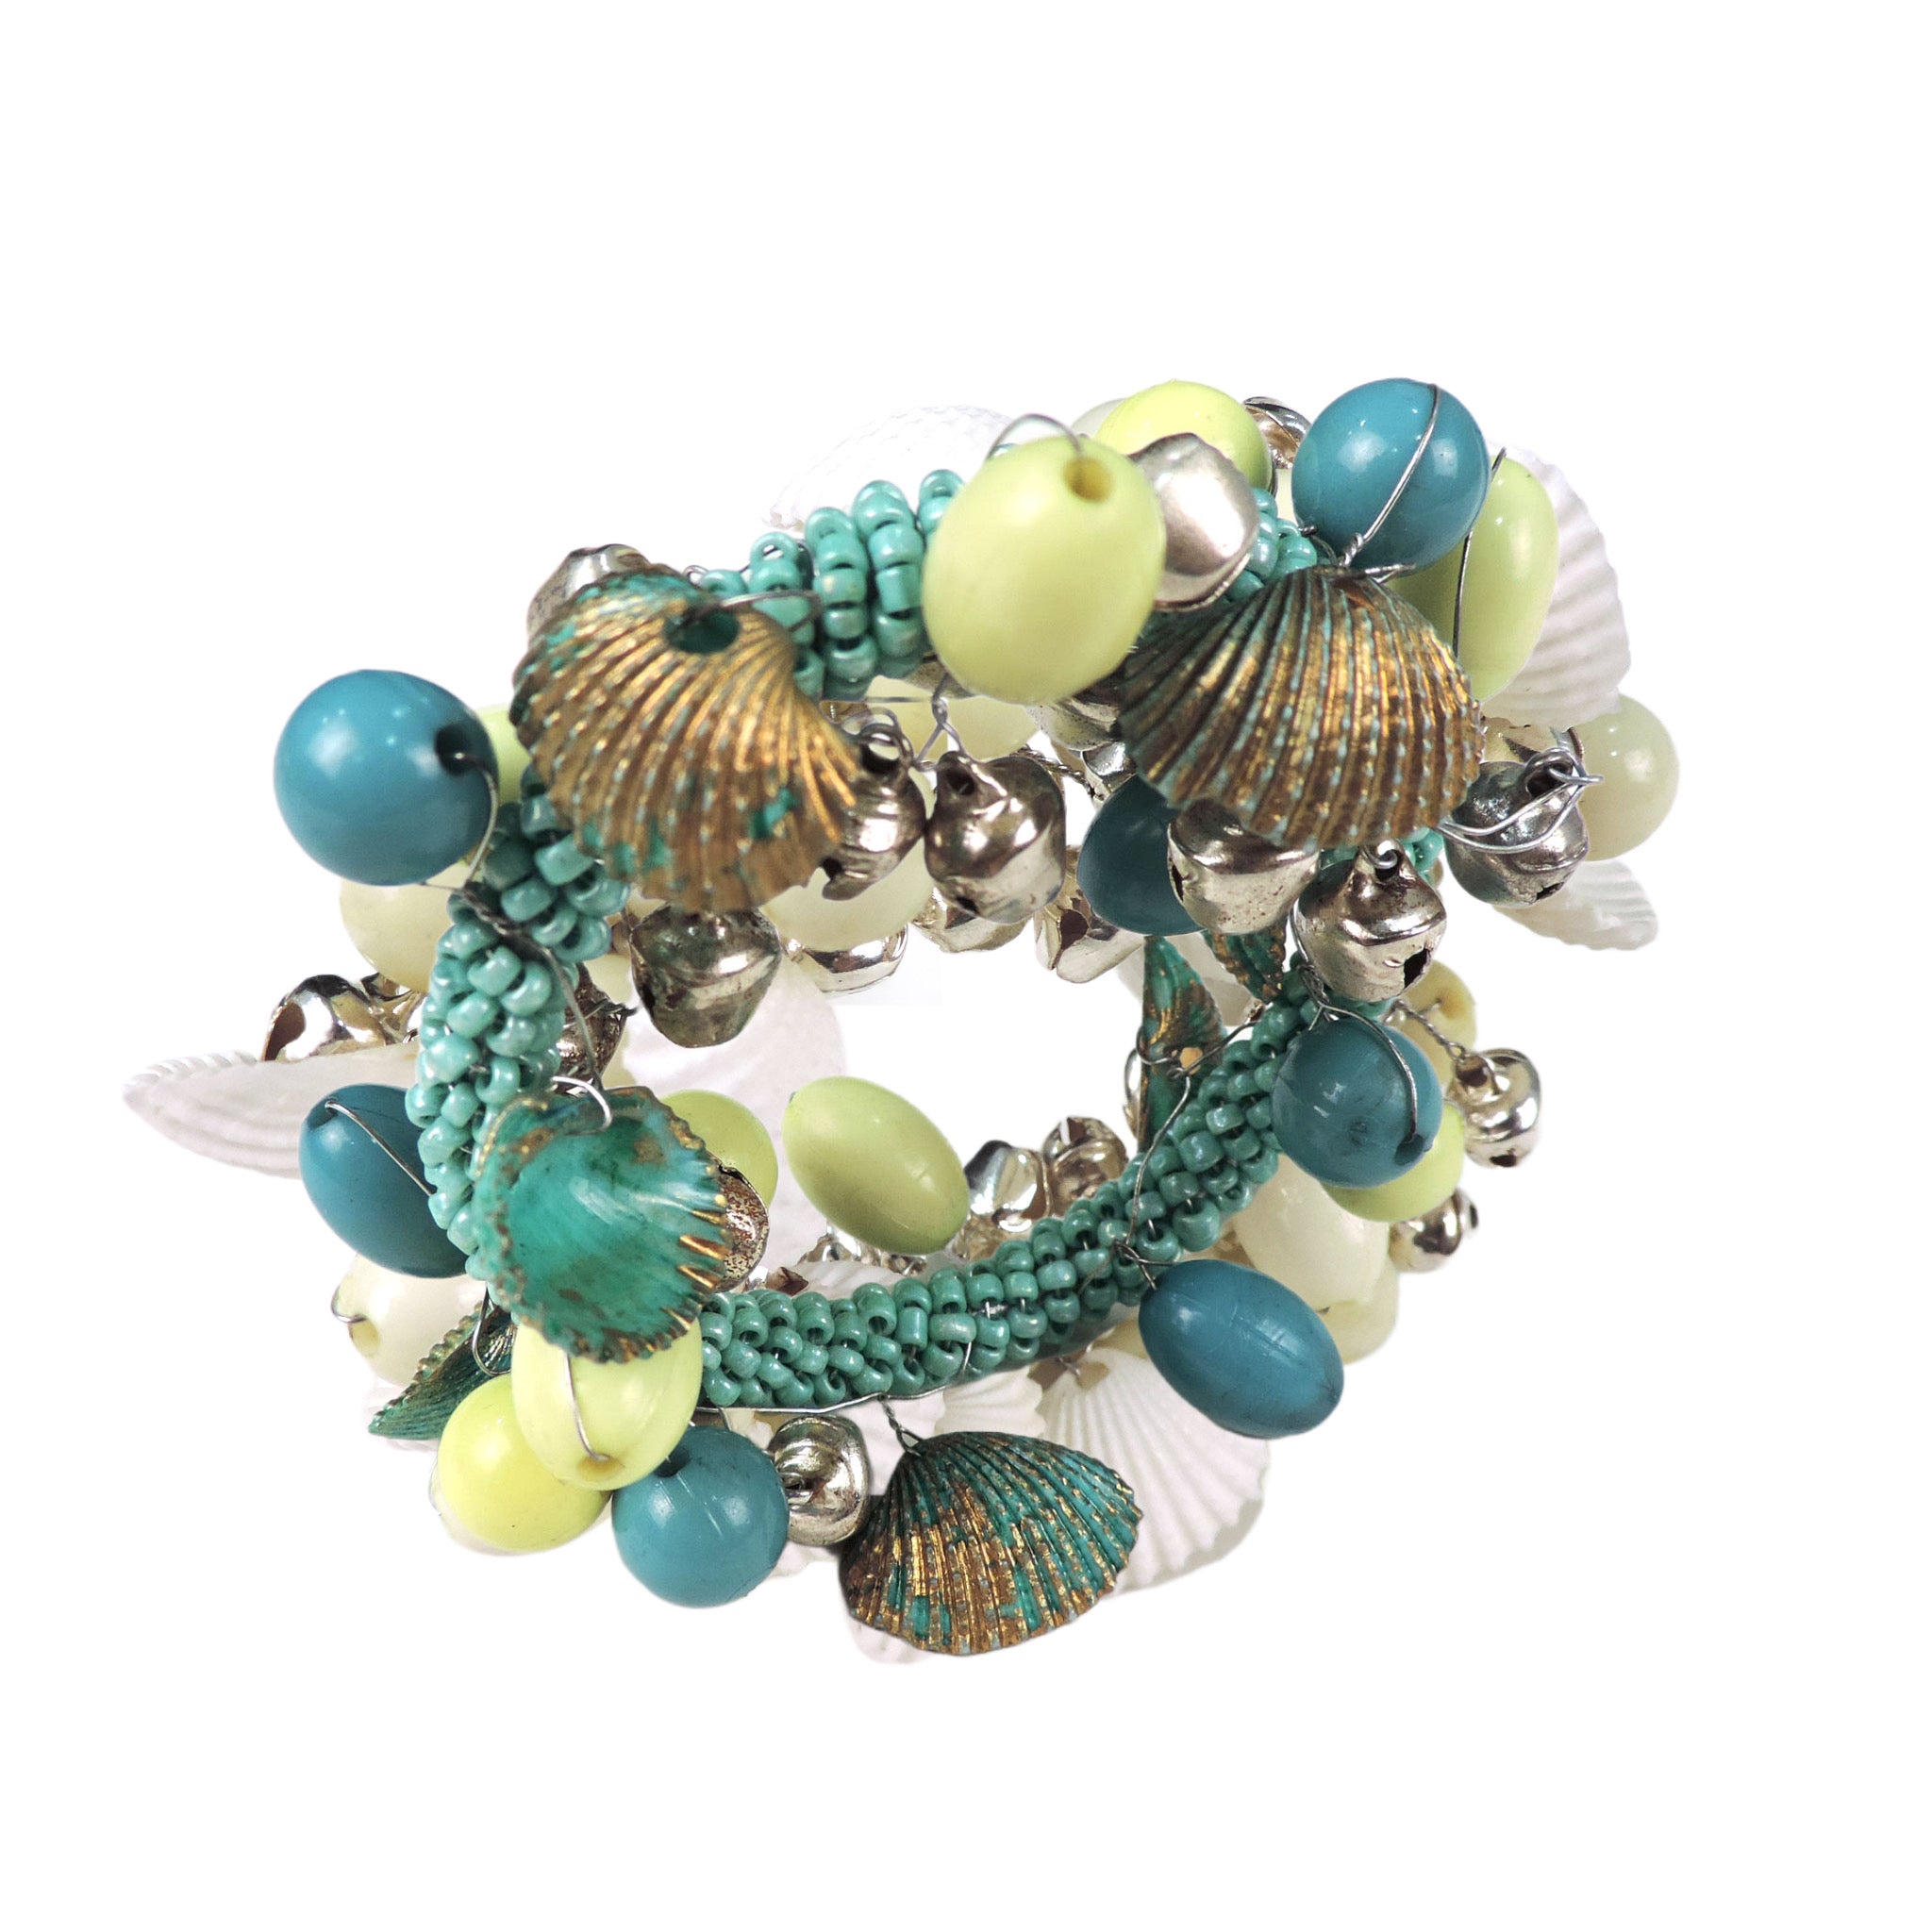 Boho Shell & Bead Napkin Ring in Turquoise, Set of 4